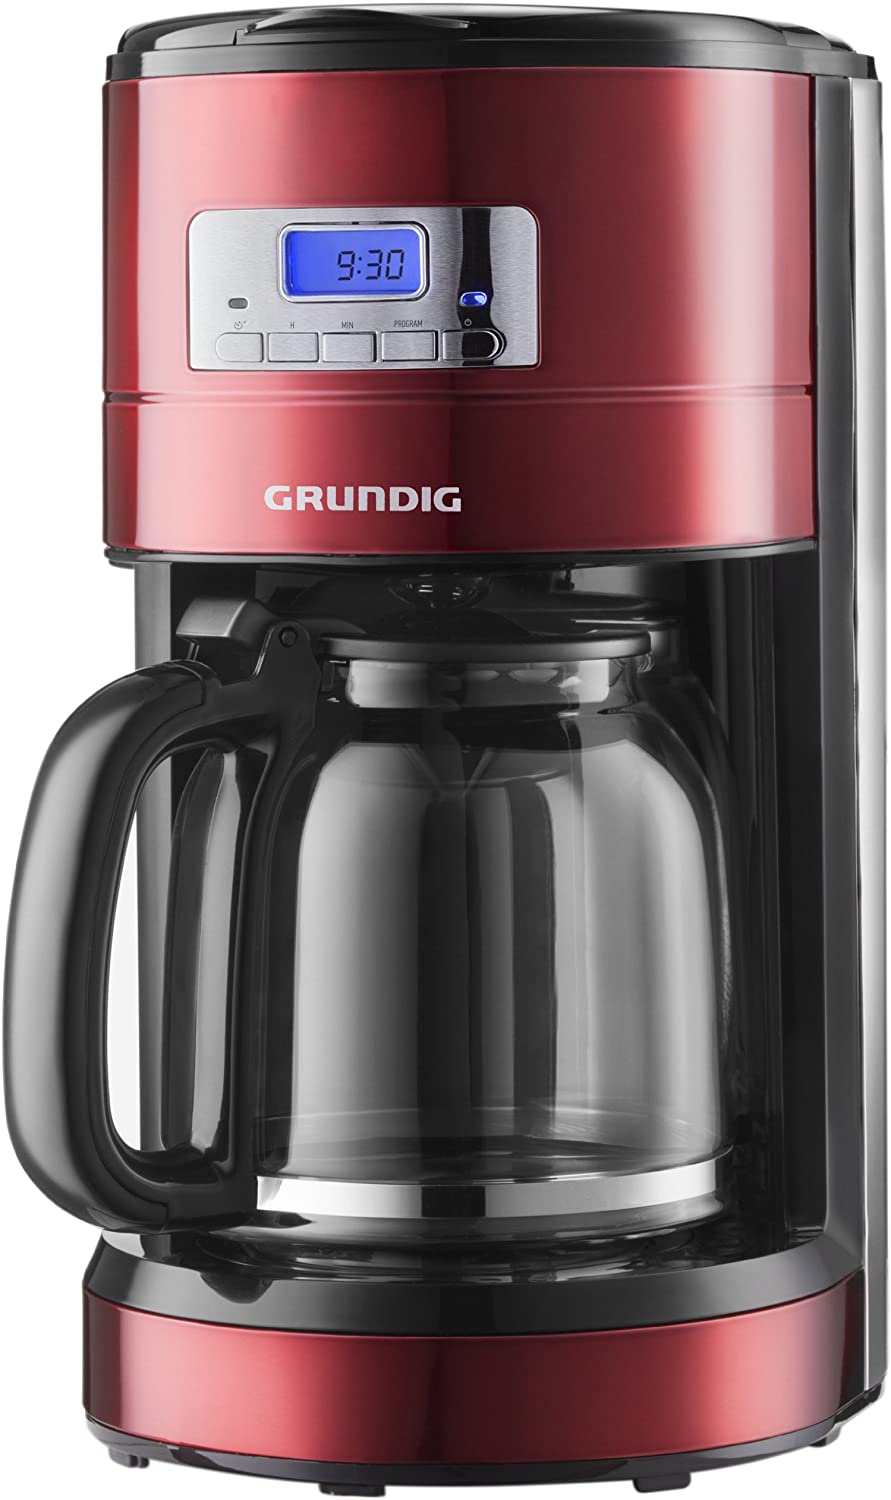 Grundig KM 6330 Coffee Machine Red Sense Digital Clock Programmable Start Time Metallic Red, Single, red